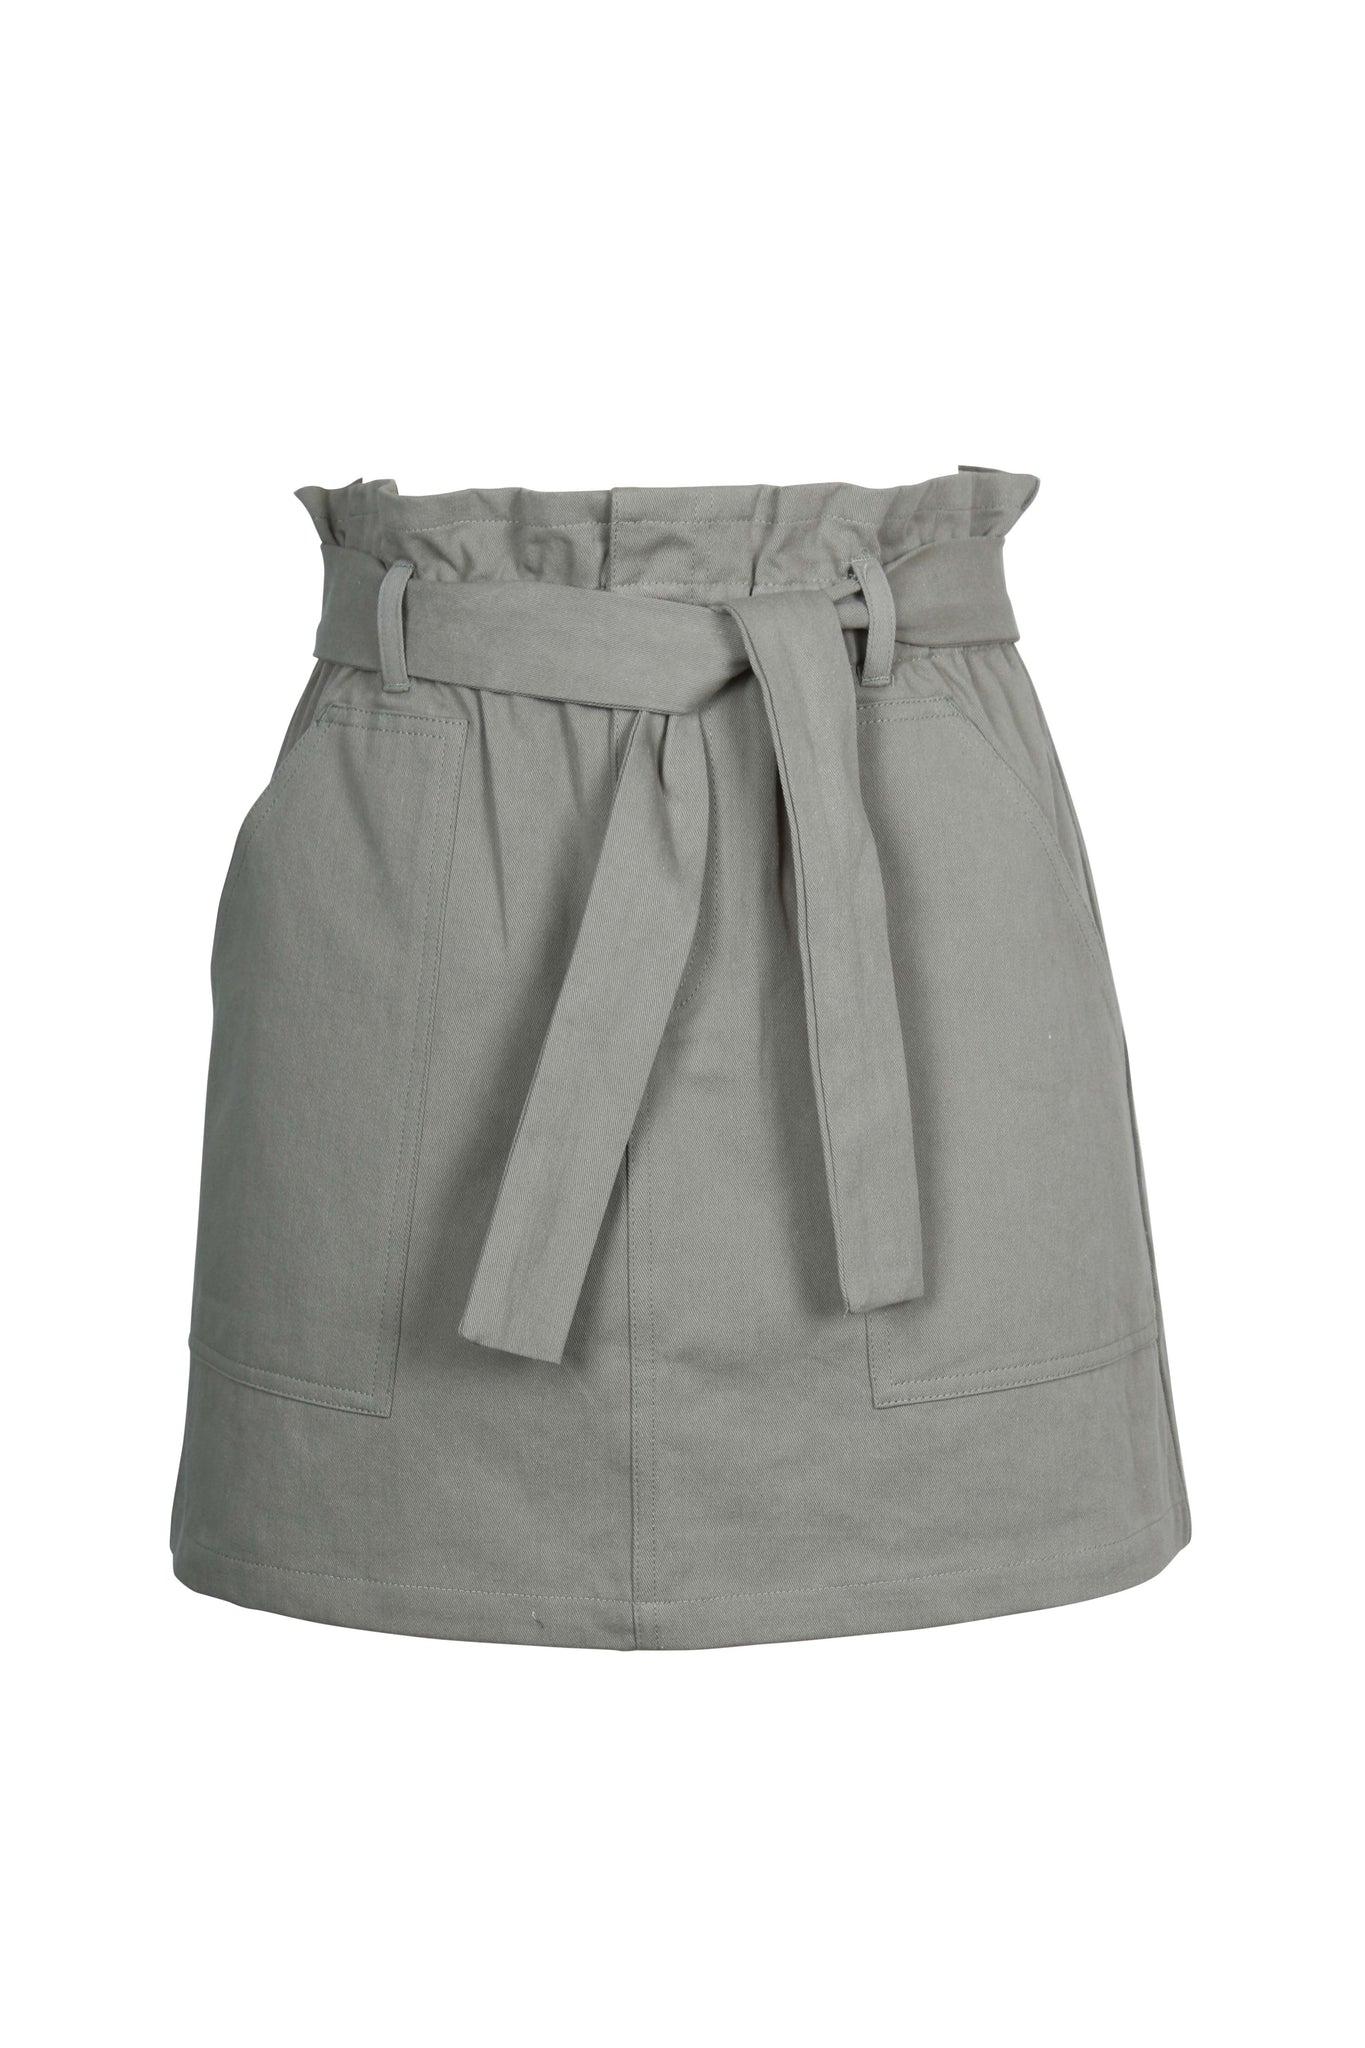 Rita Elastic Waist Skirt by MINKPINK